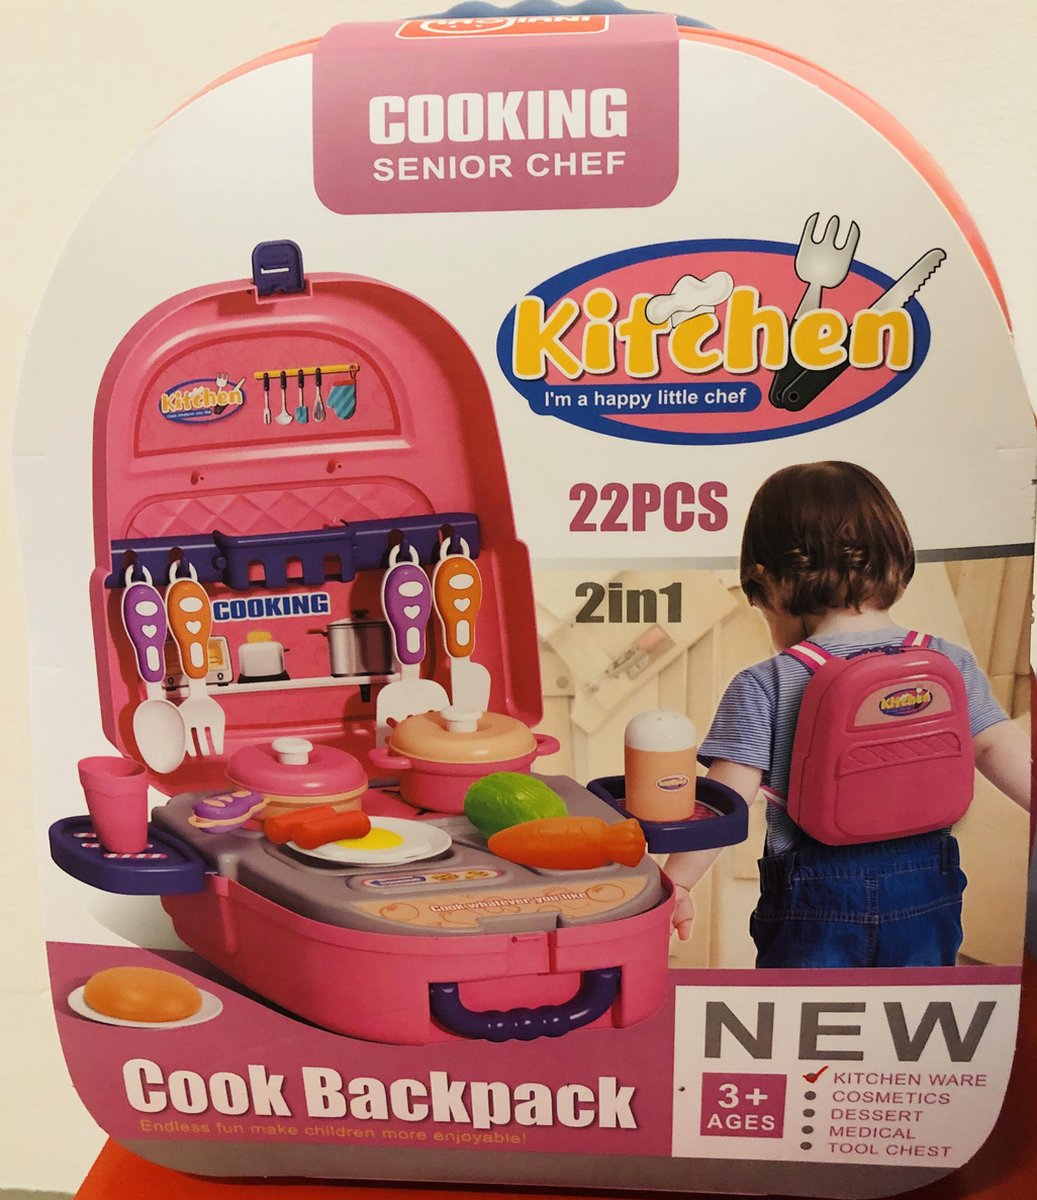 Cook Backpack| Kitchen|Cooking senior chef|Fun| Toys|Present|Kitchen ware|Endless fun make children more enjoyable